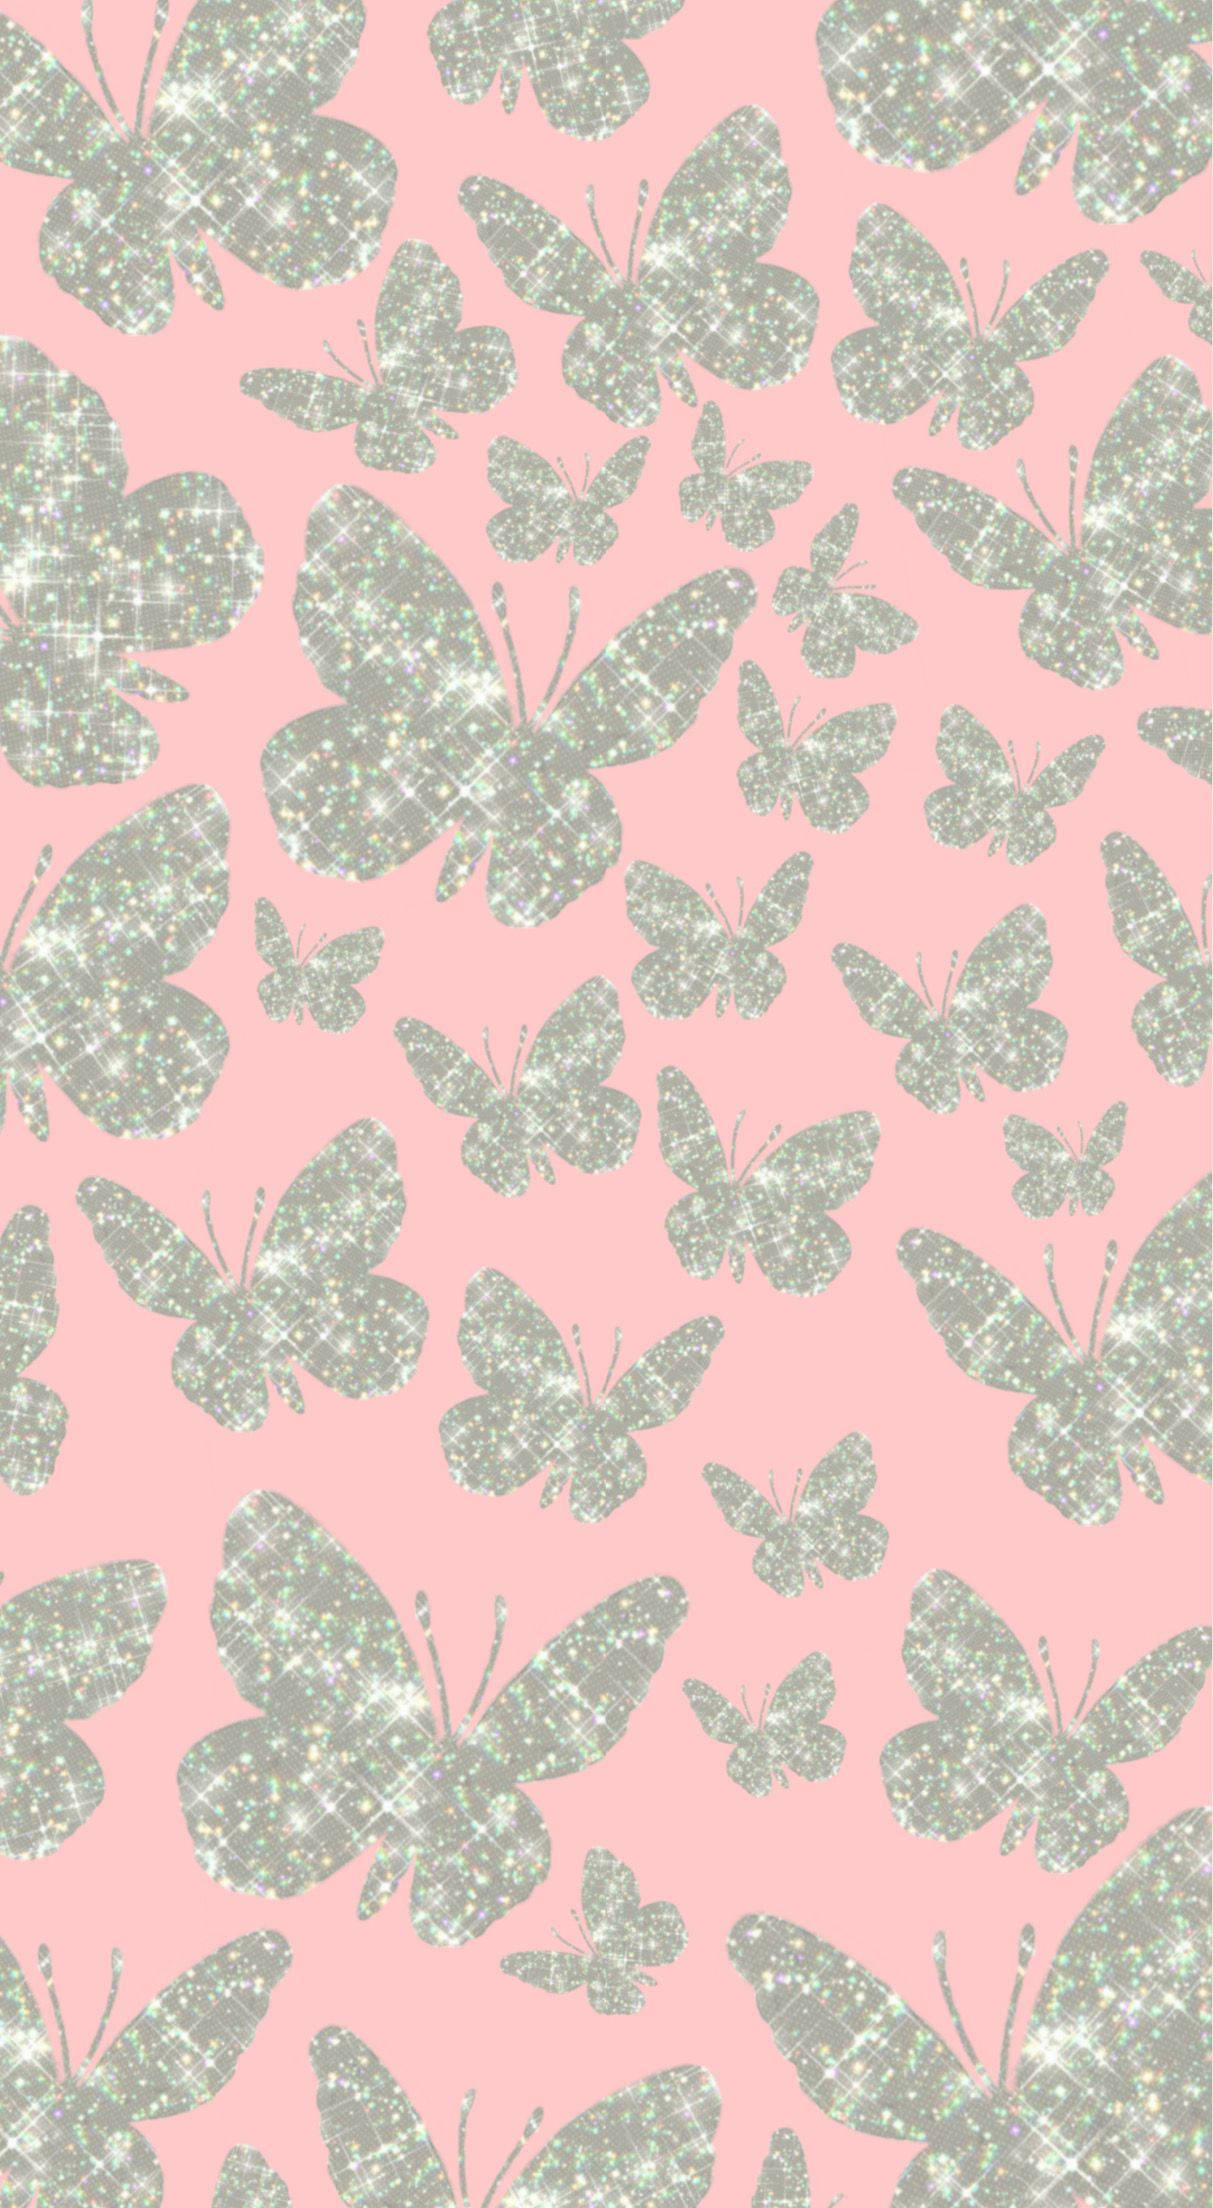 Download Green Butterflies For Y2k Wallpaper